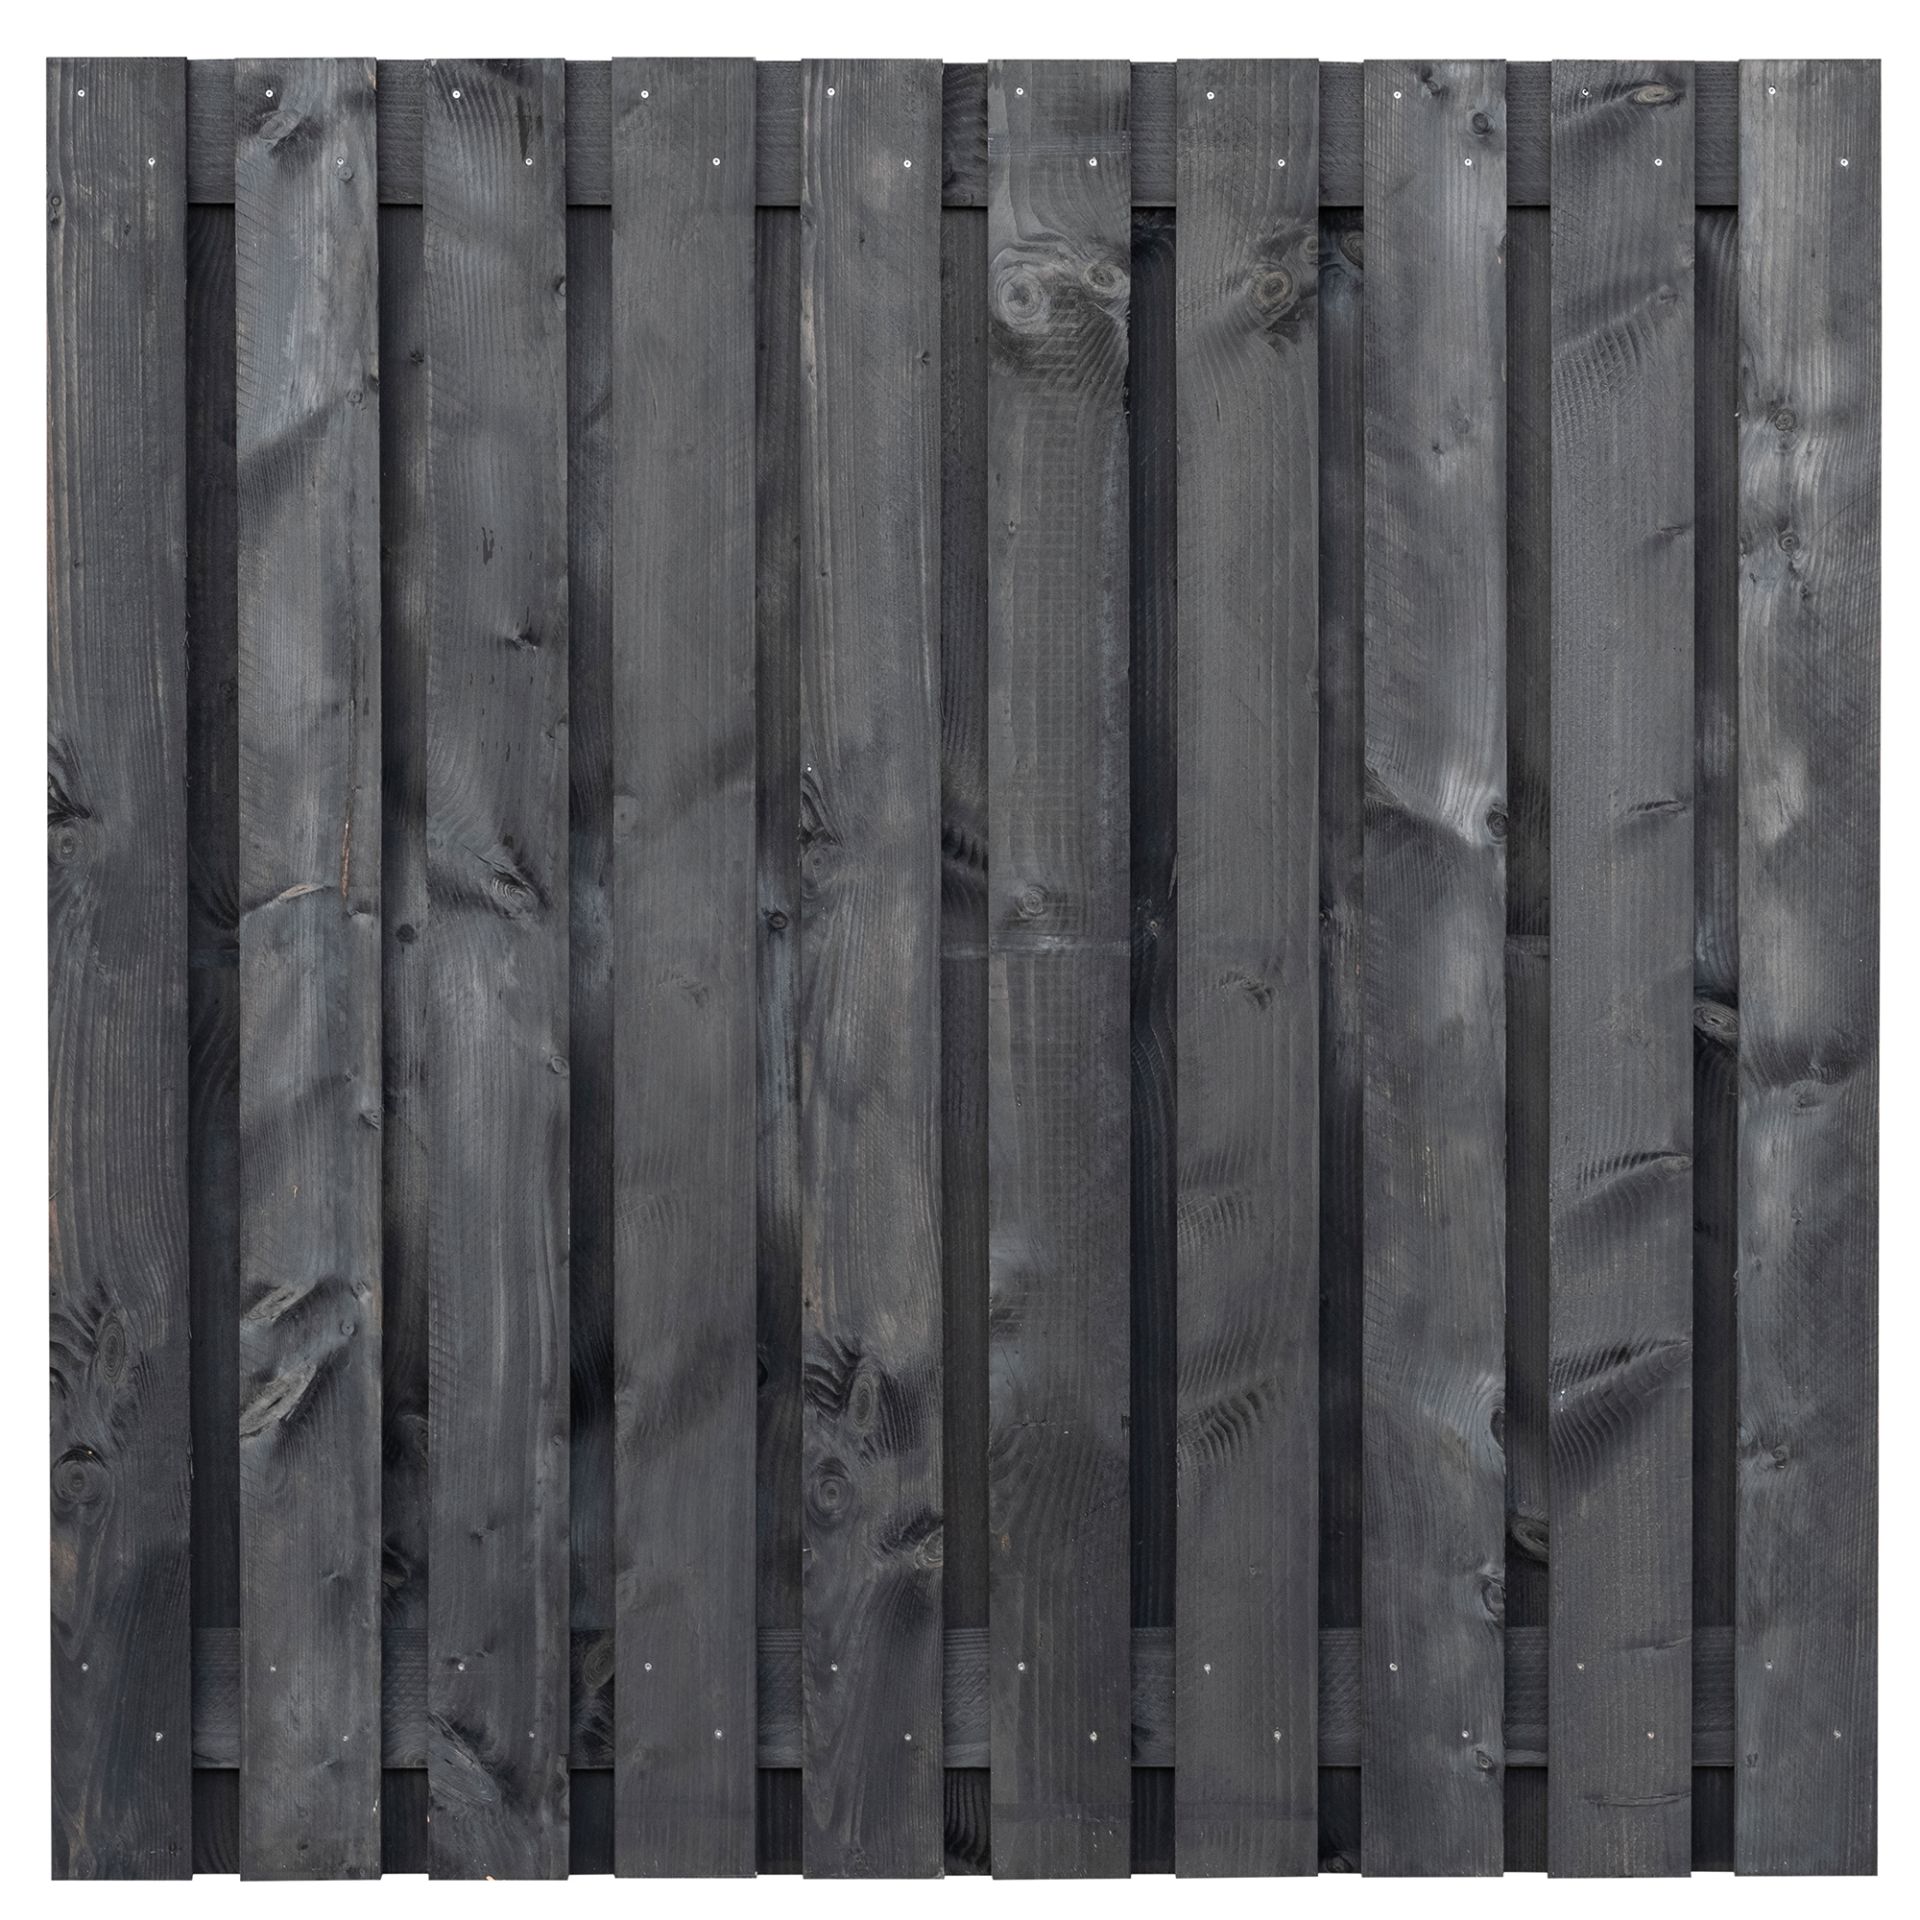 Octrooi Vul in Pracht Tuinscherm lariks 21 planks (19+2) - Marlies 180x180cm zwart geïmpregneerd  - Planken: 1.6x14.0cm / 1 | De Vliert Sierbestrating